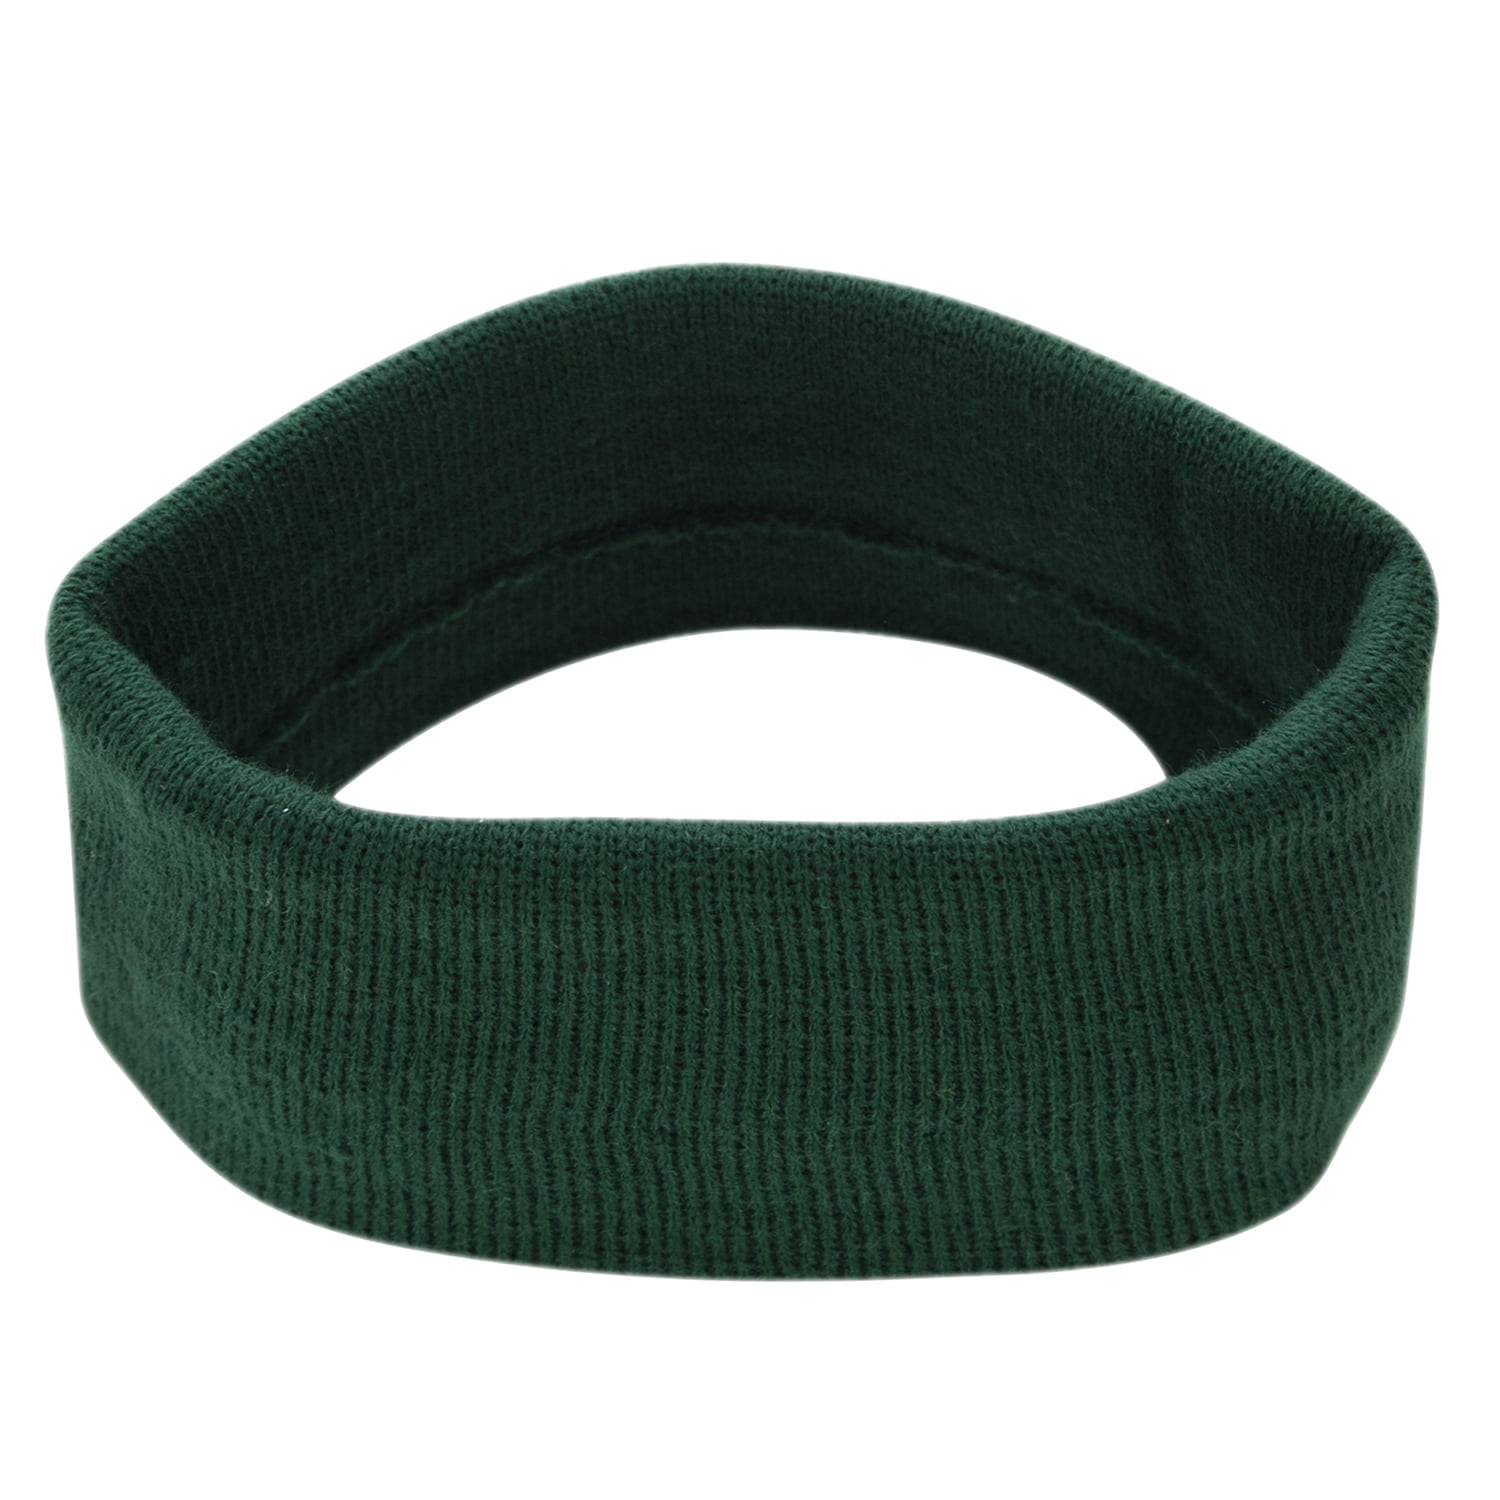 1pc Hunter Green Winter Knit Stretch Headband - Single 1pc - Made in USA